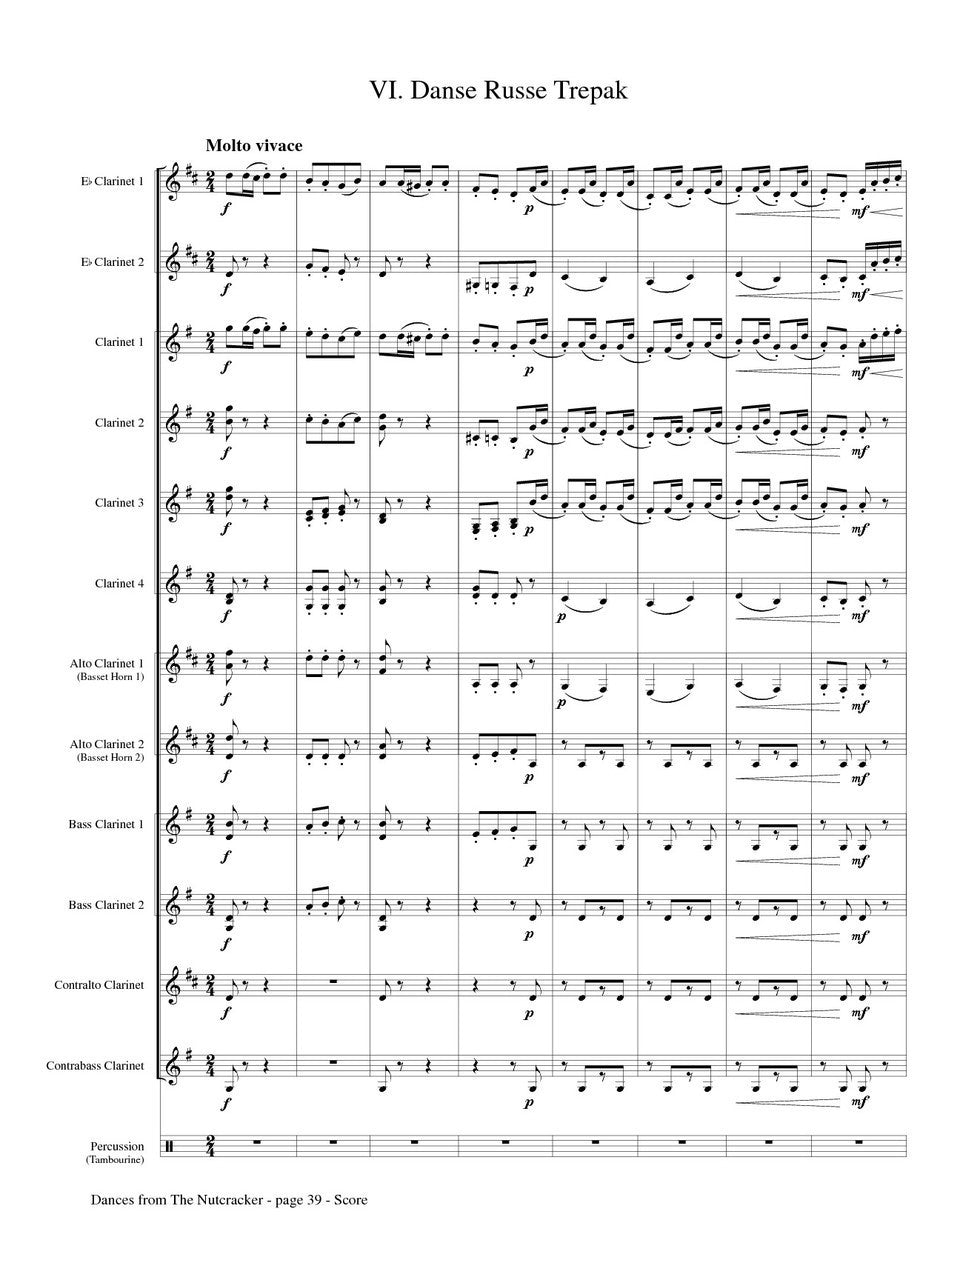 Tchaikovsky (arr. Brendon Lucas) -  Dances from The Nutcracker for Clarinet Choir